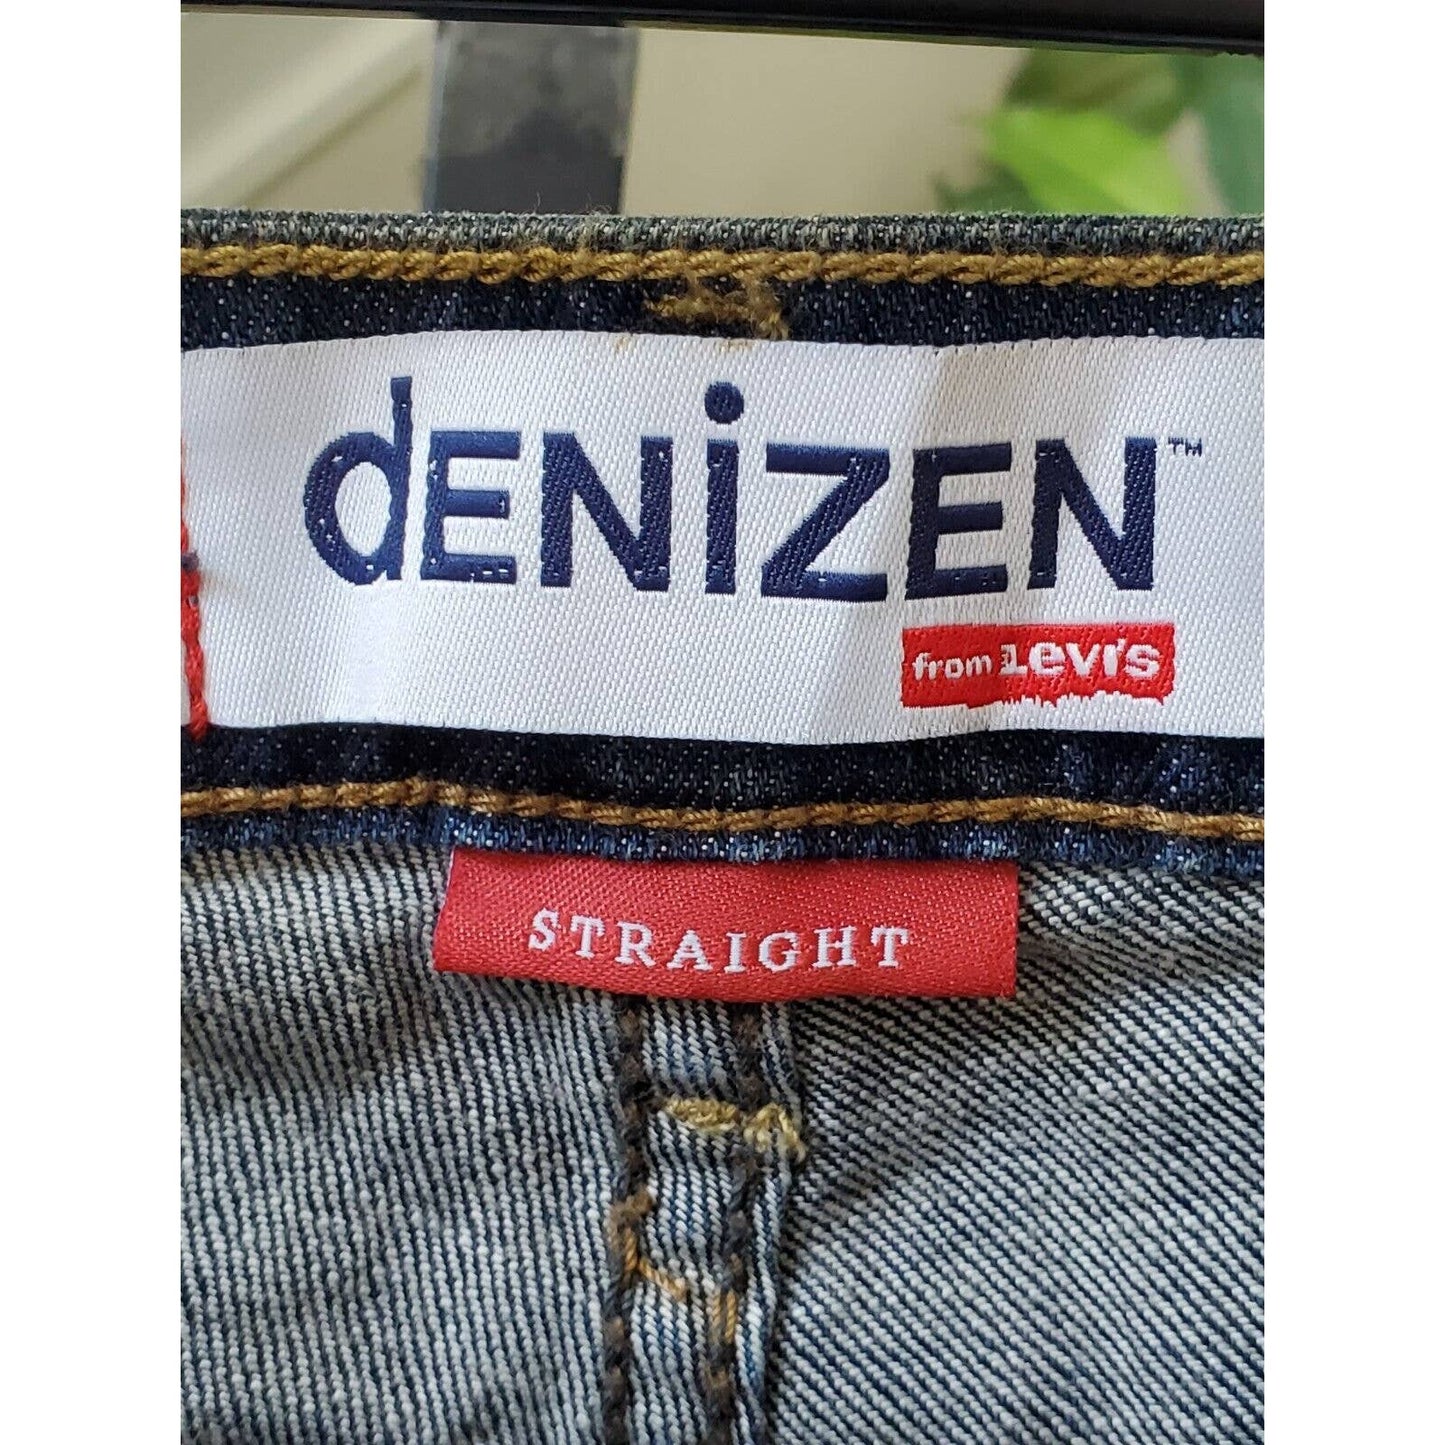 Denizen Women's Blue Denim Cotton Mid Rise Pull on Straight Jeans Pant Size 16M